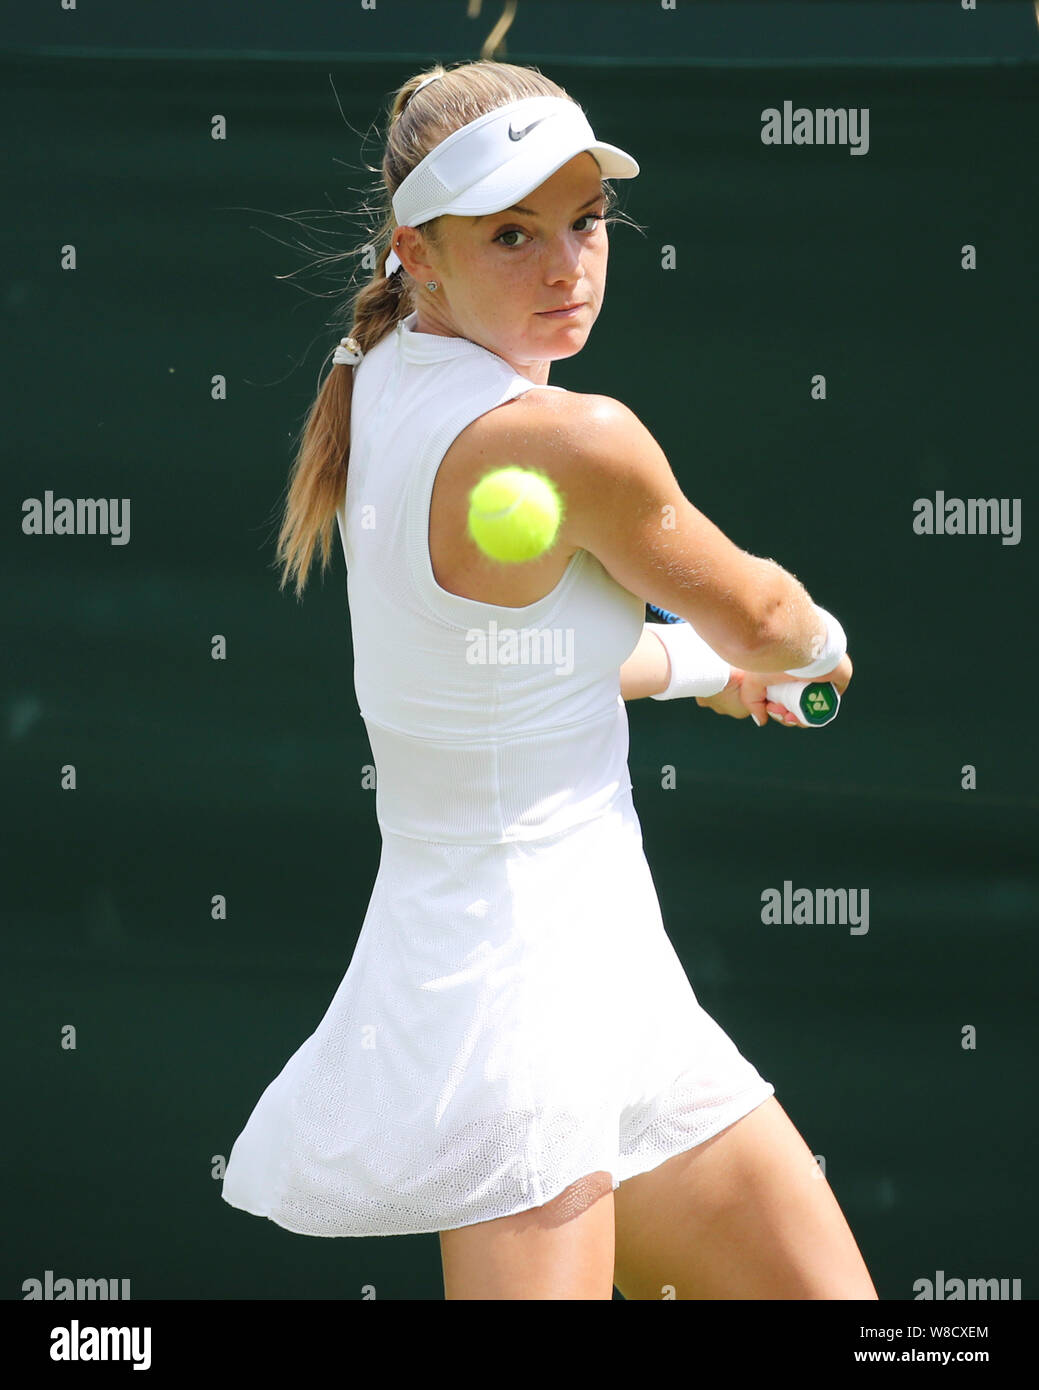 British tennis player Katie Swana playing backhand shot during 2019 Wimbledon Championships, London, England, United Kingdom Stock Photo